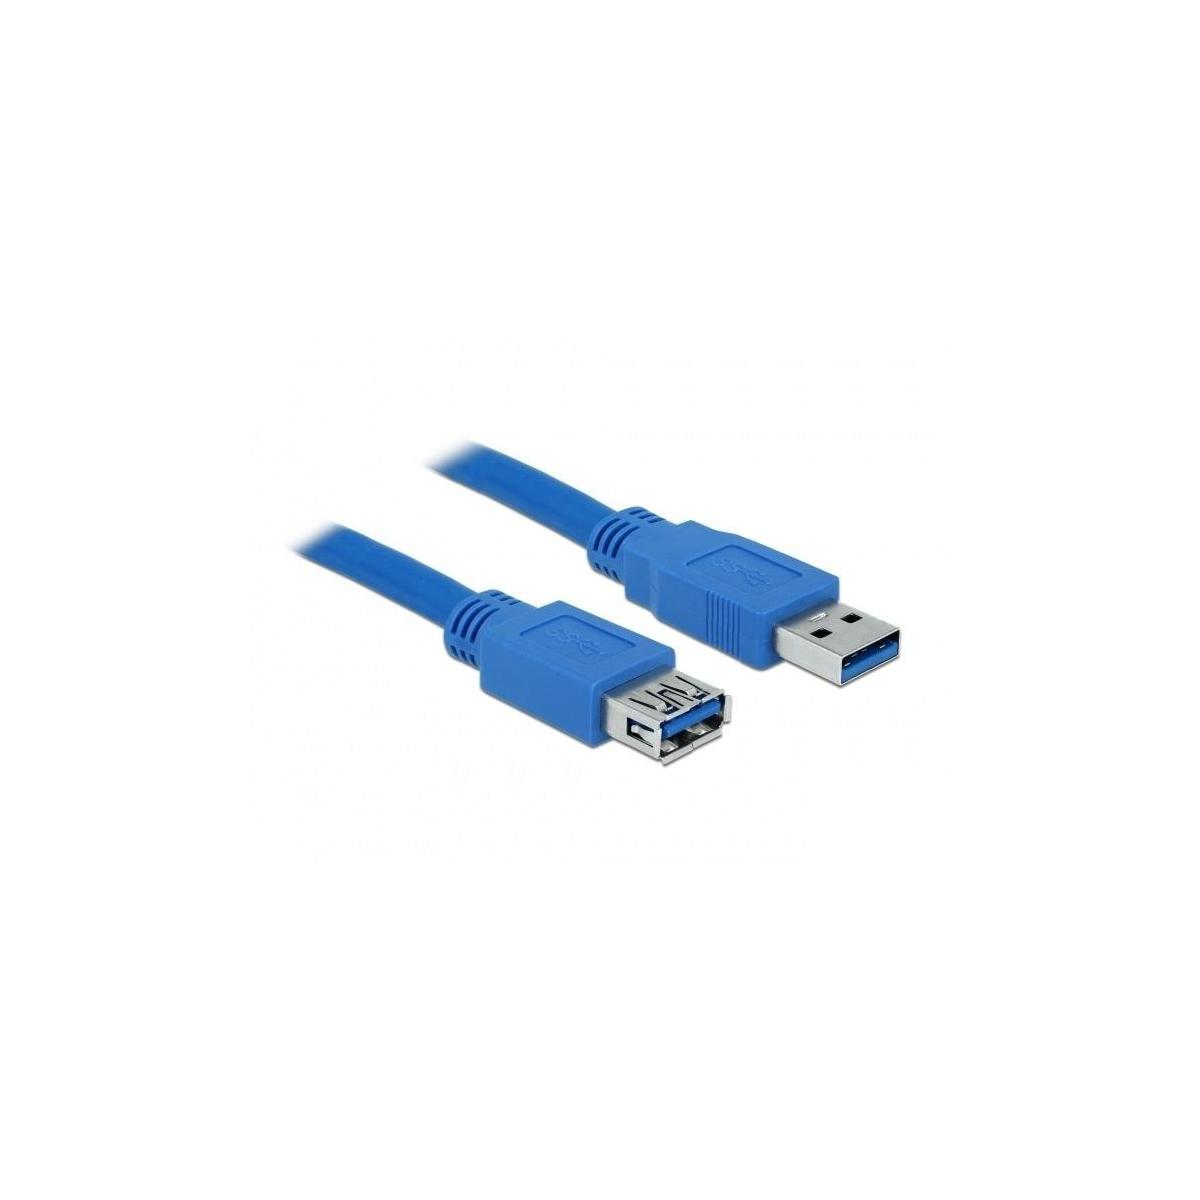 DELOCK DELOCK Kabel USB 3.0 Peripheriegeräte & Verlaeng A/A Kabel, mehrfarbig 5mSt/B Zubehör USB